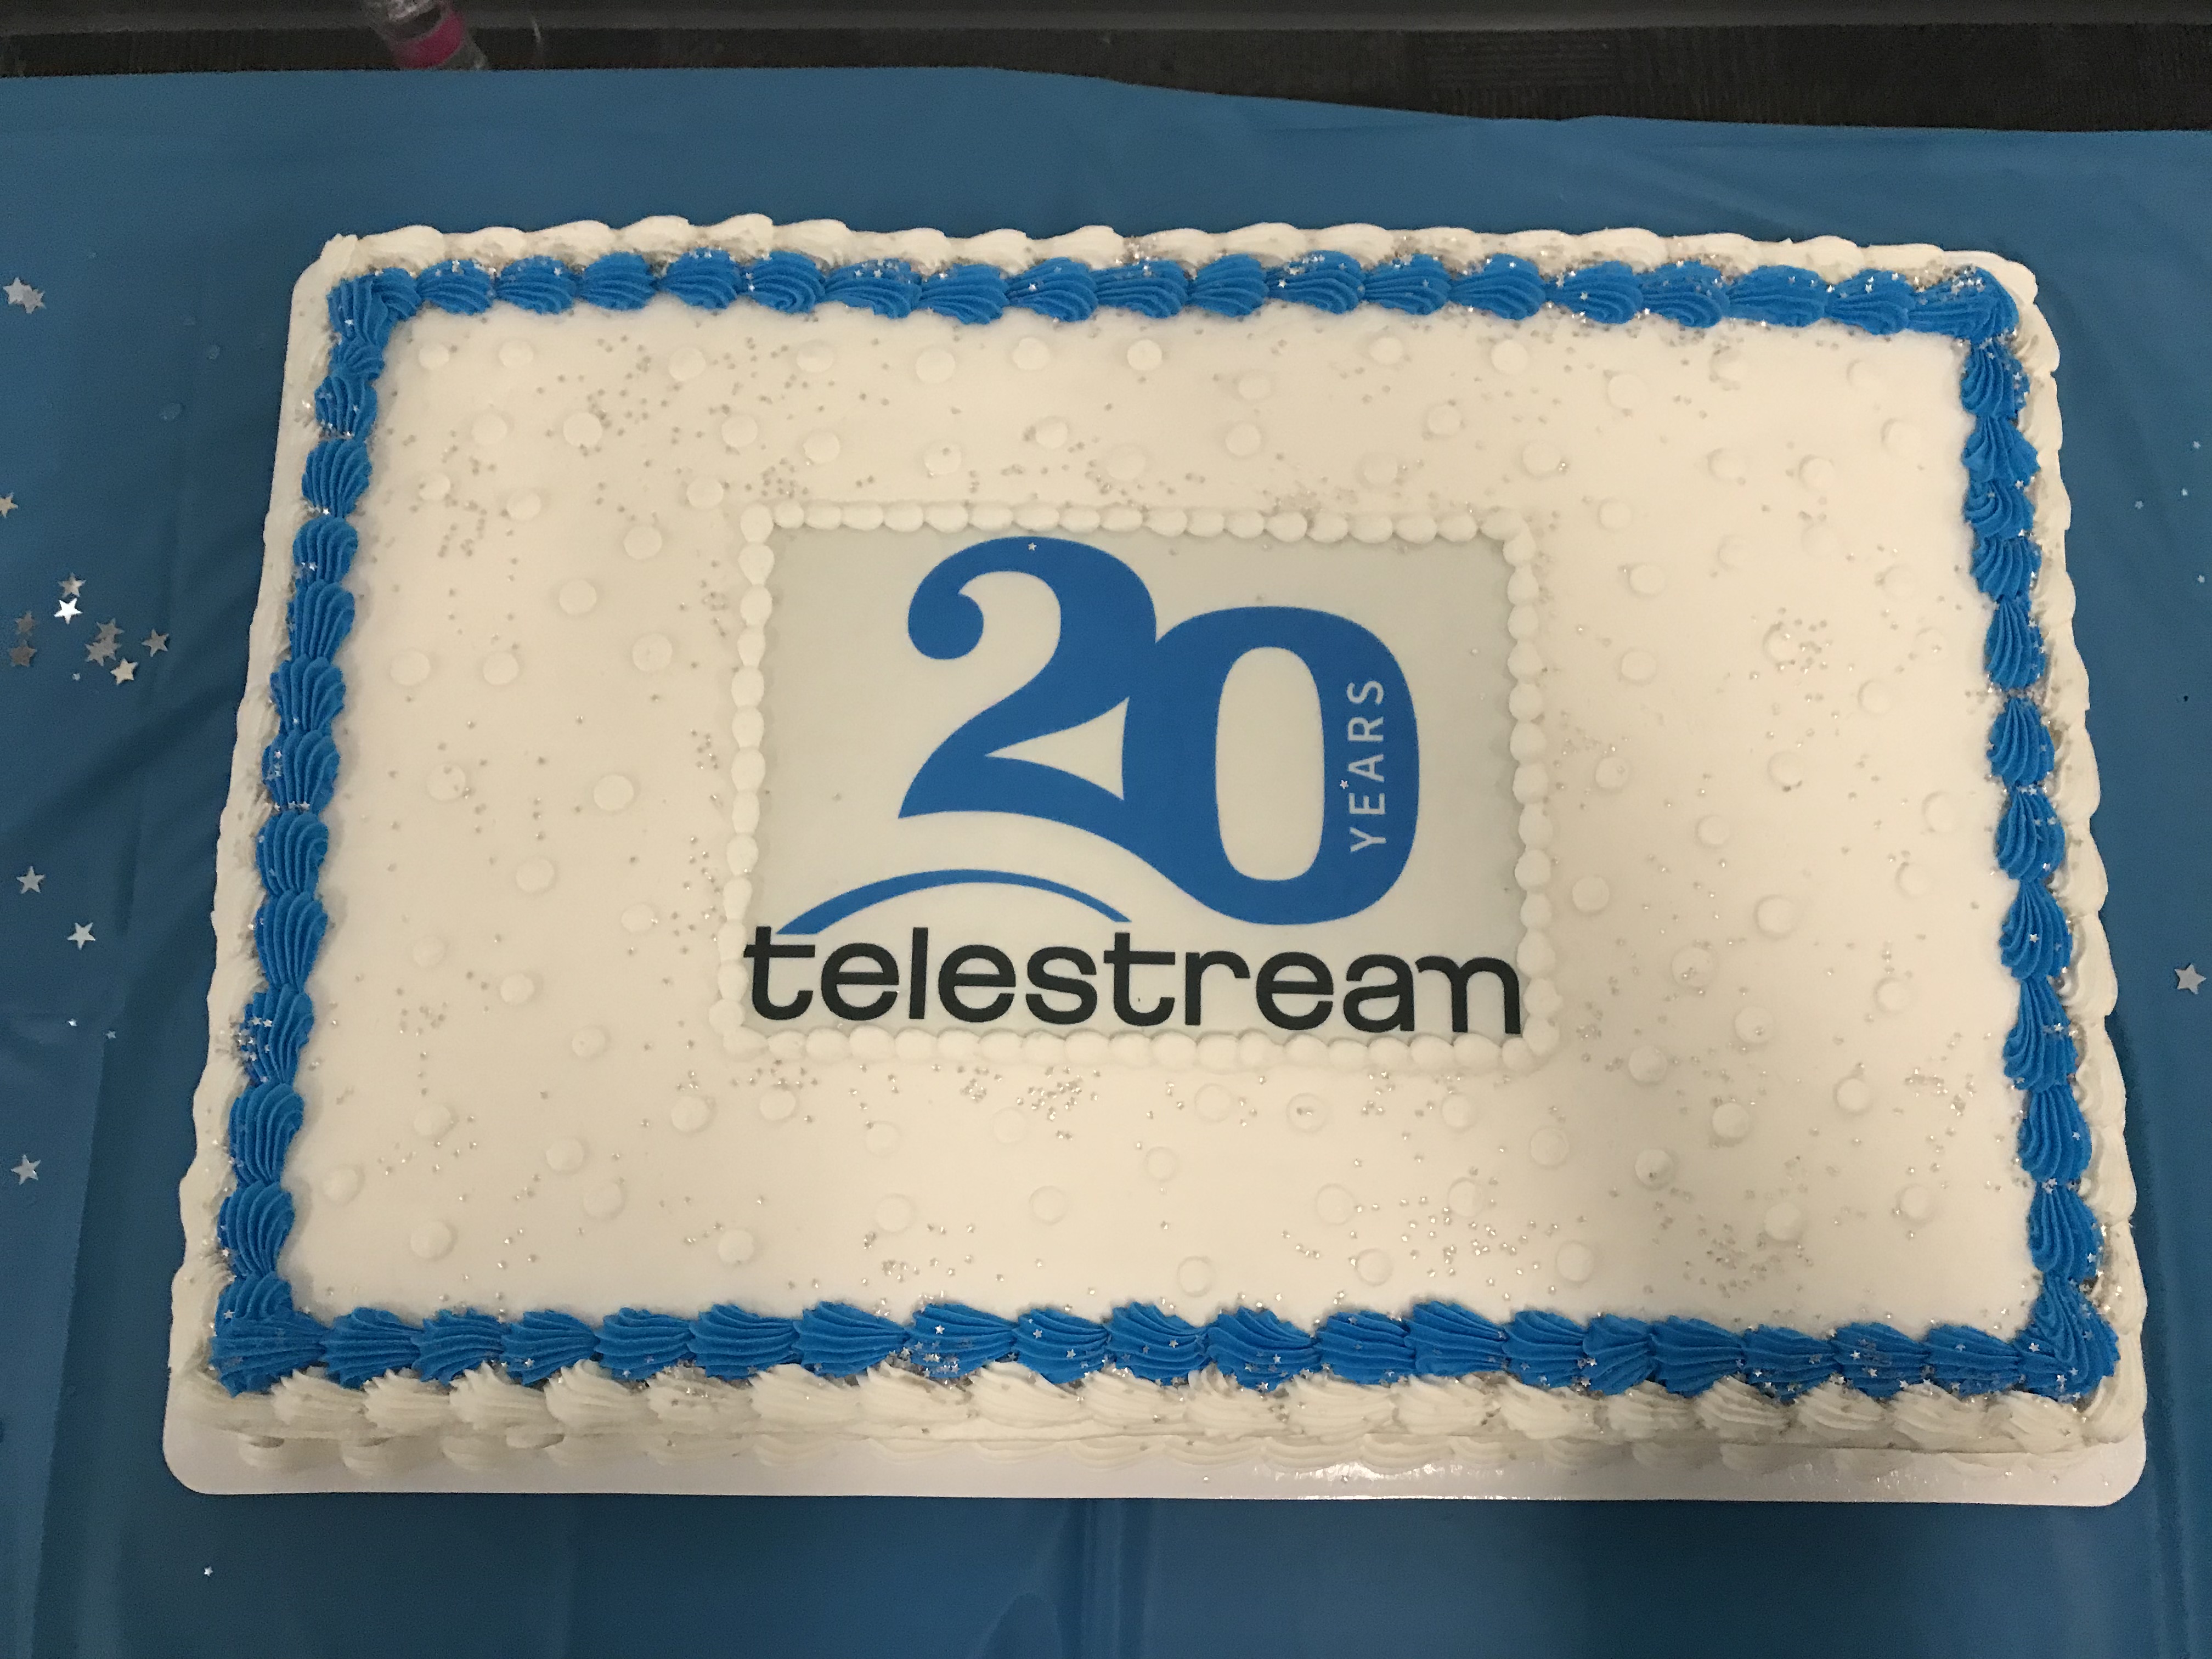 Telestream Celebrates 20 years!